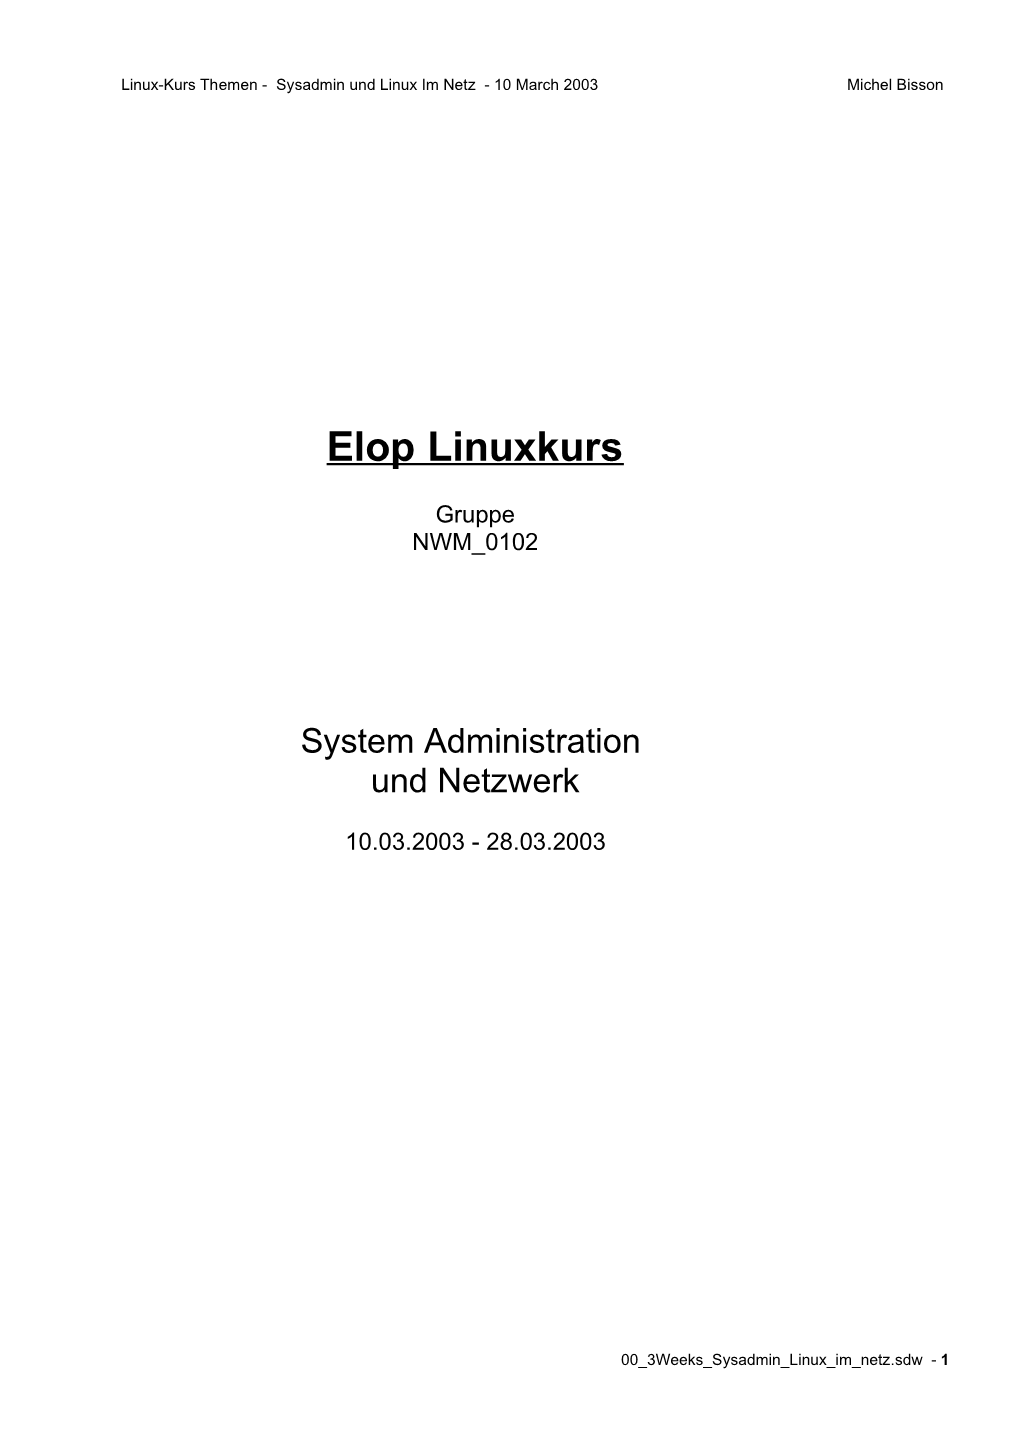 Elop Linuxkurs